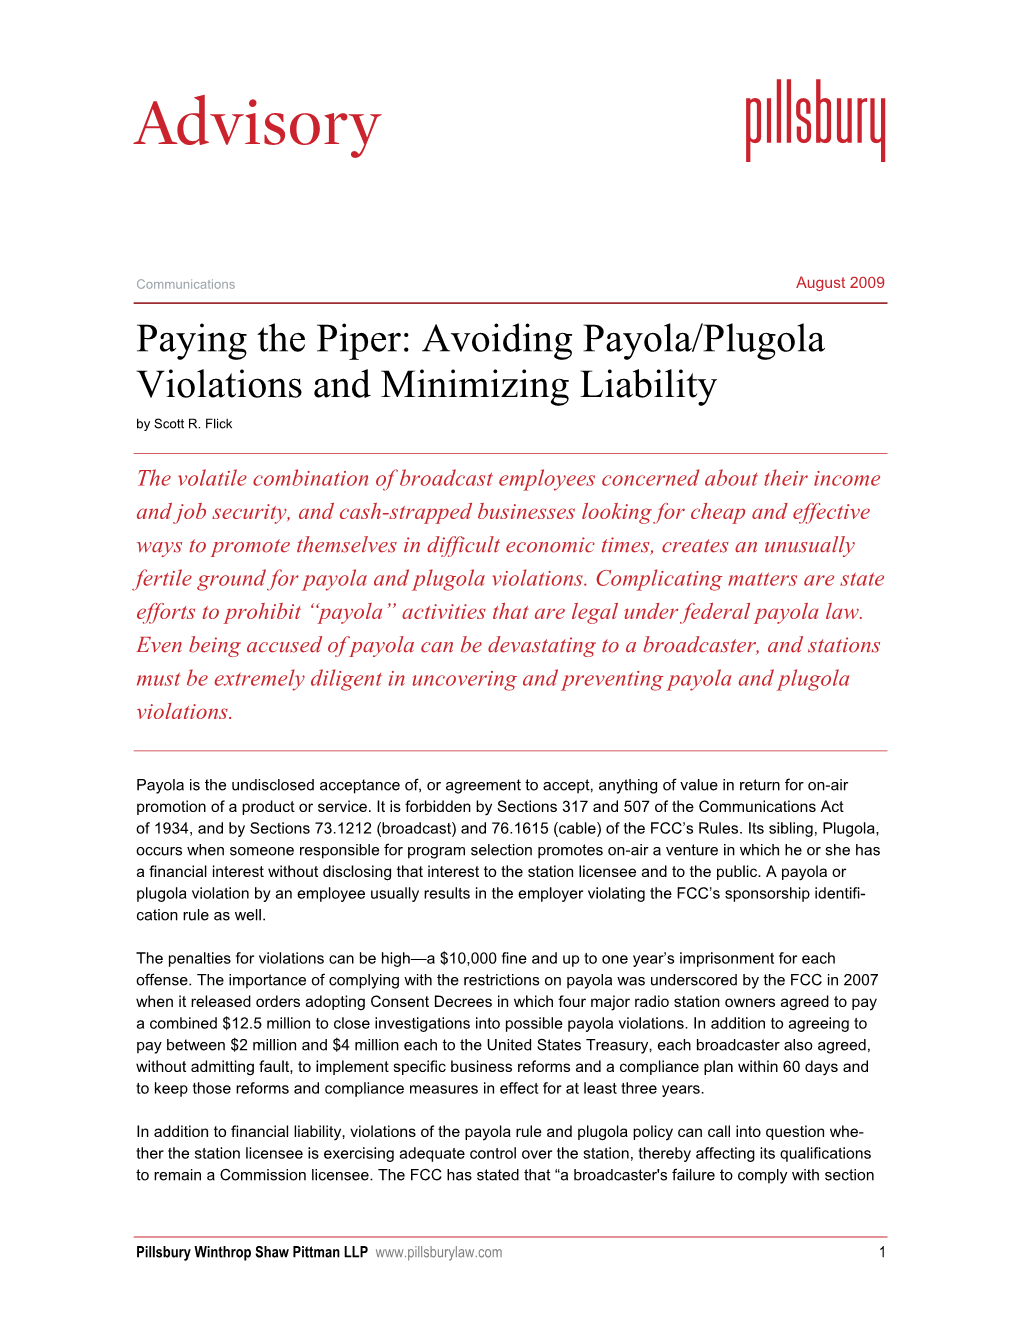 Avoiding Payola/Plugola Violations and Minimizing Liability by Scott R